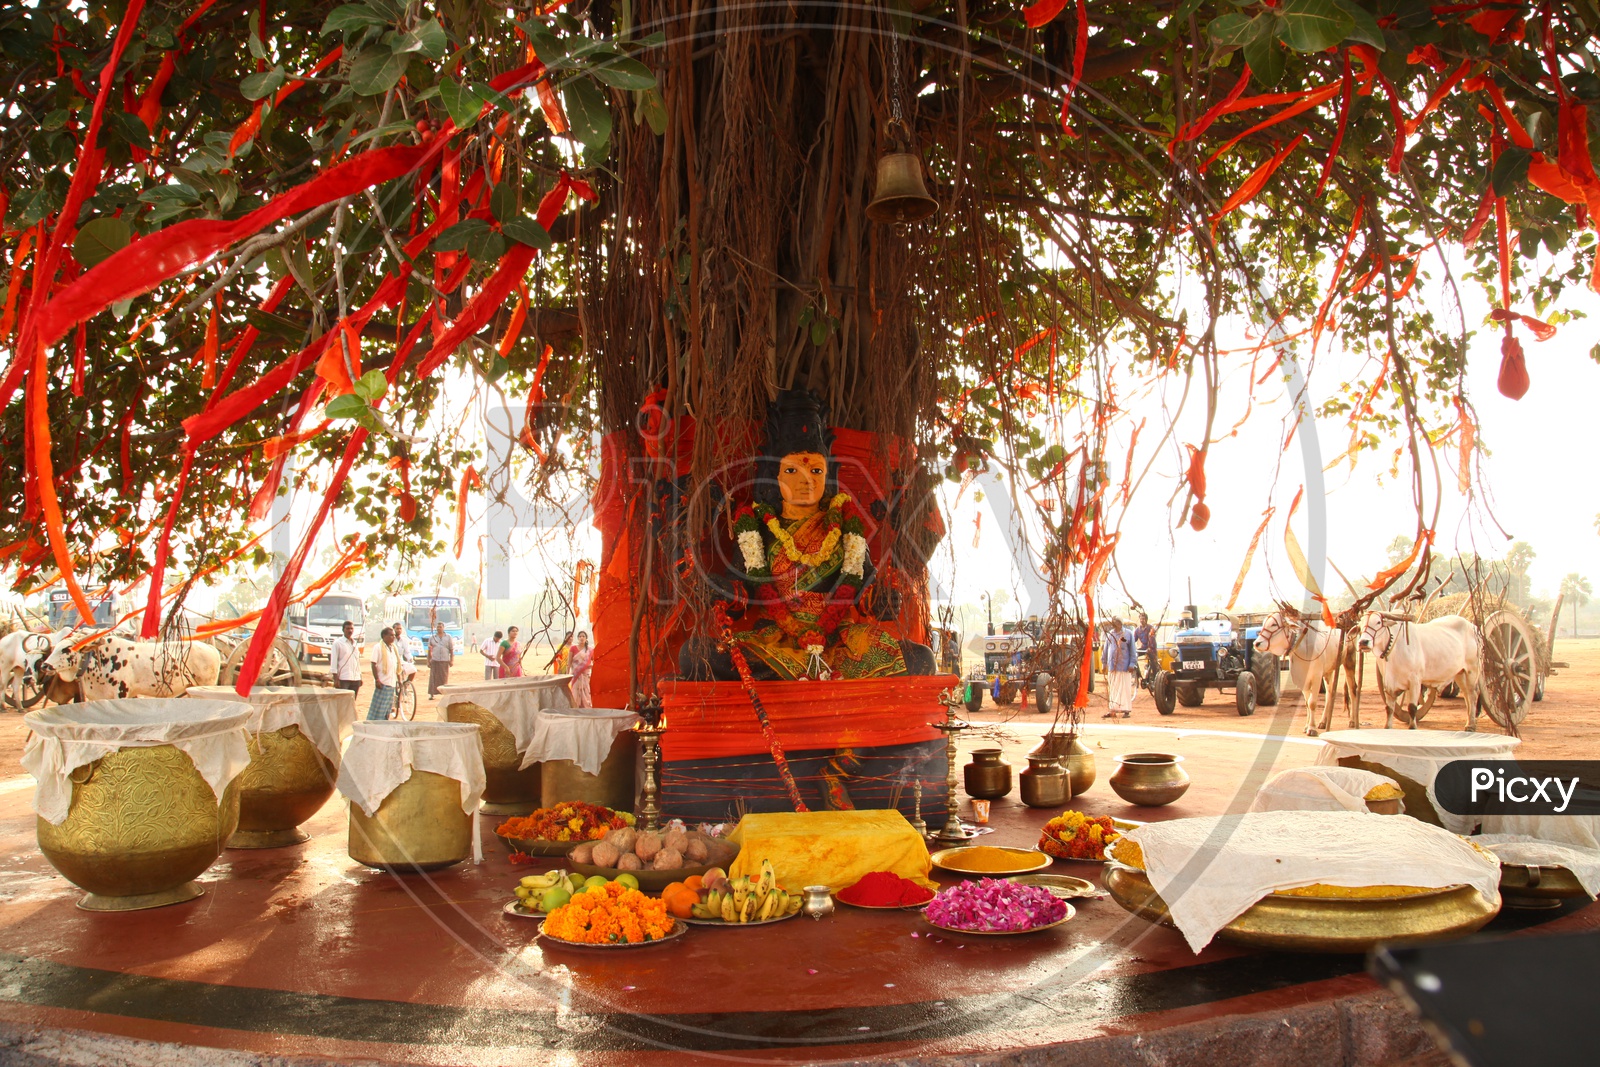 Hindu Goddess Idol under a tree